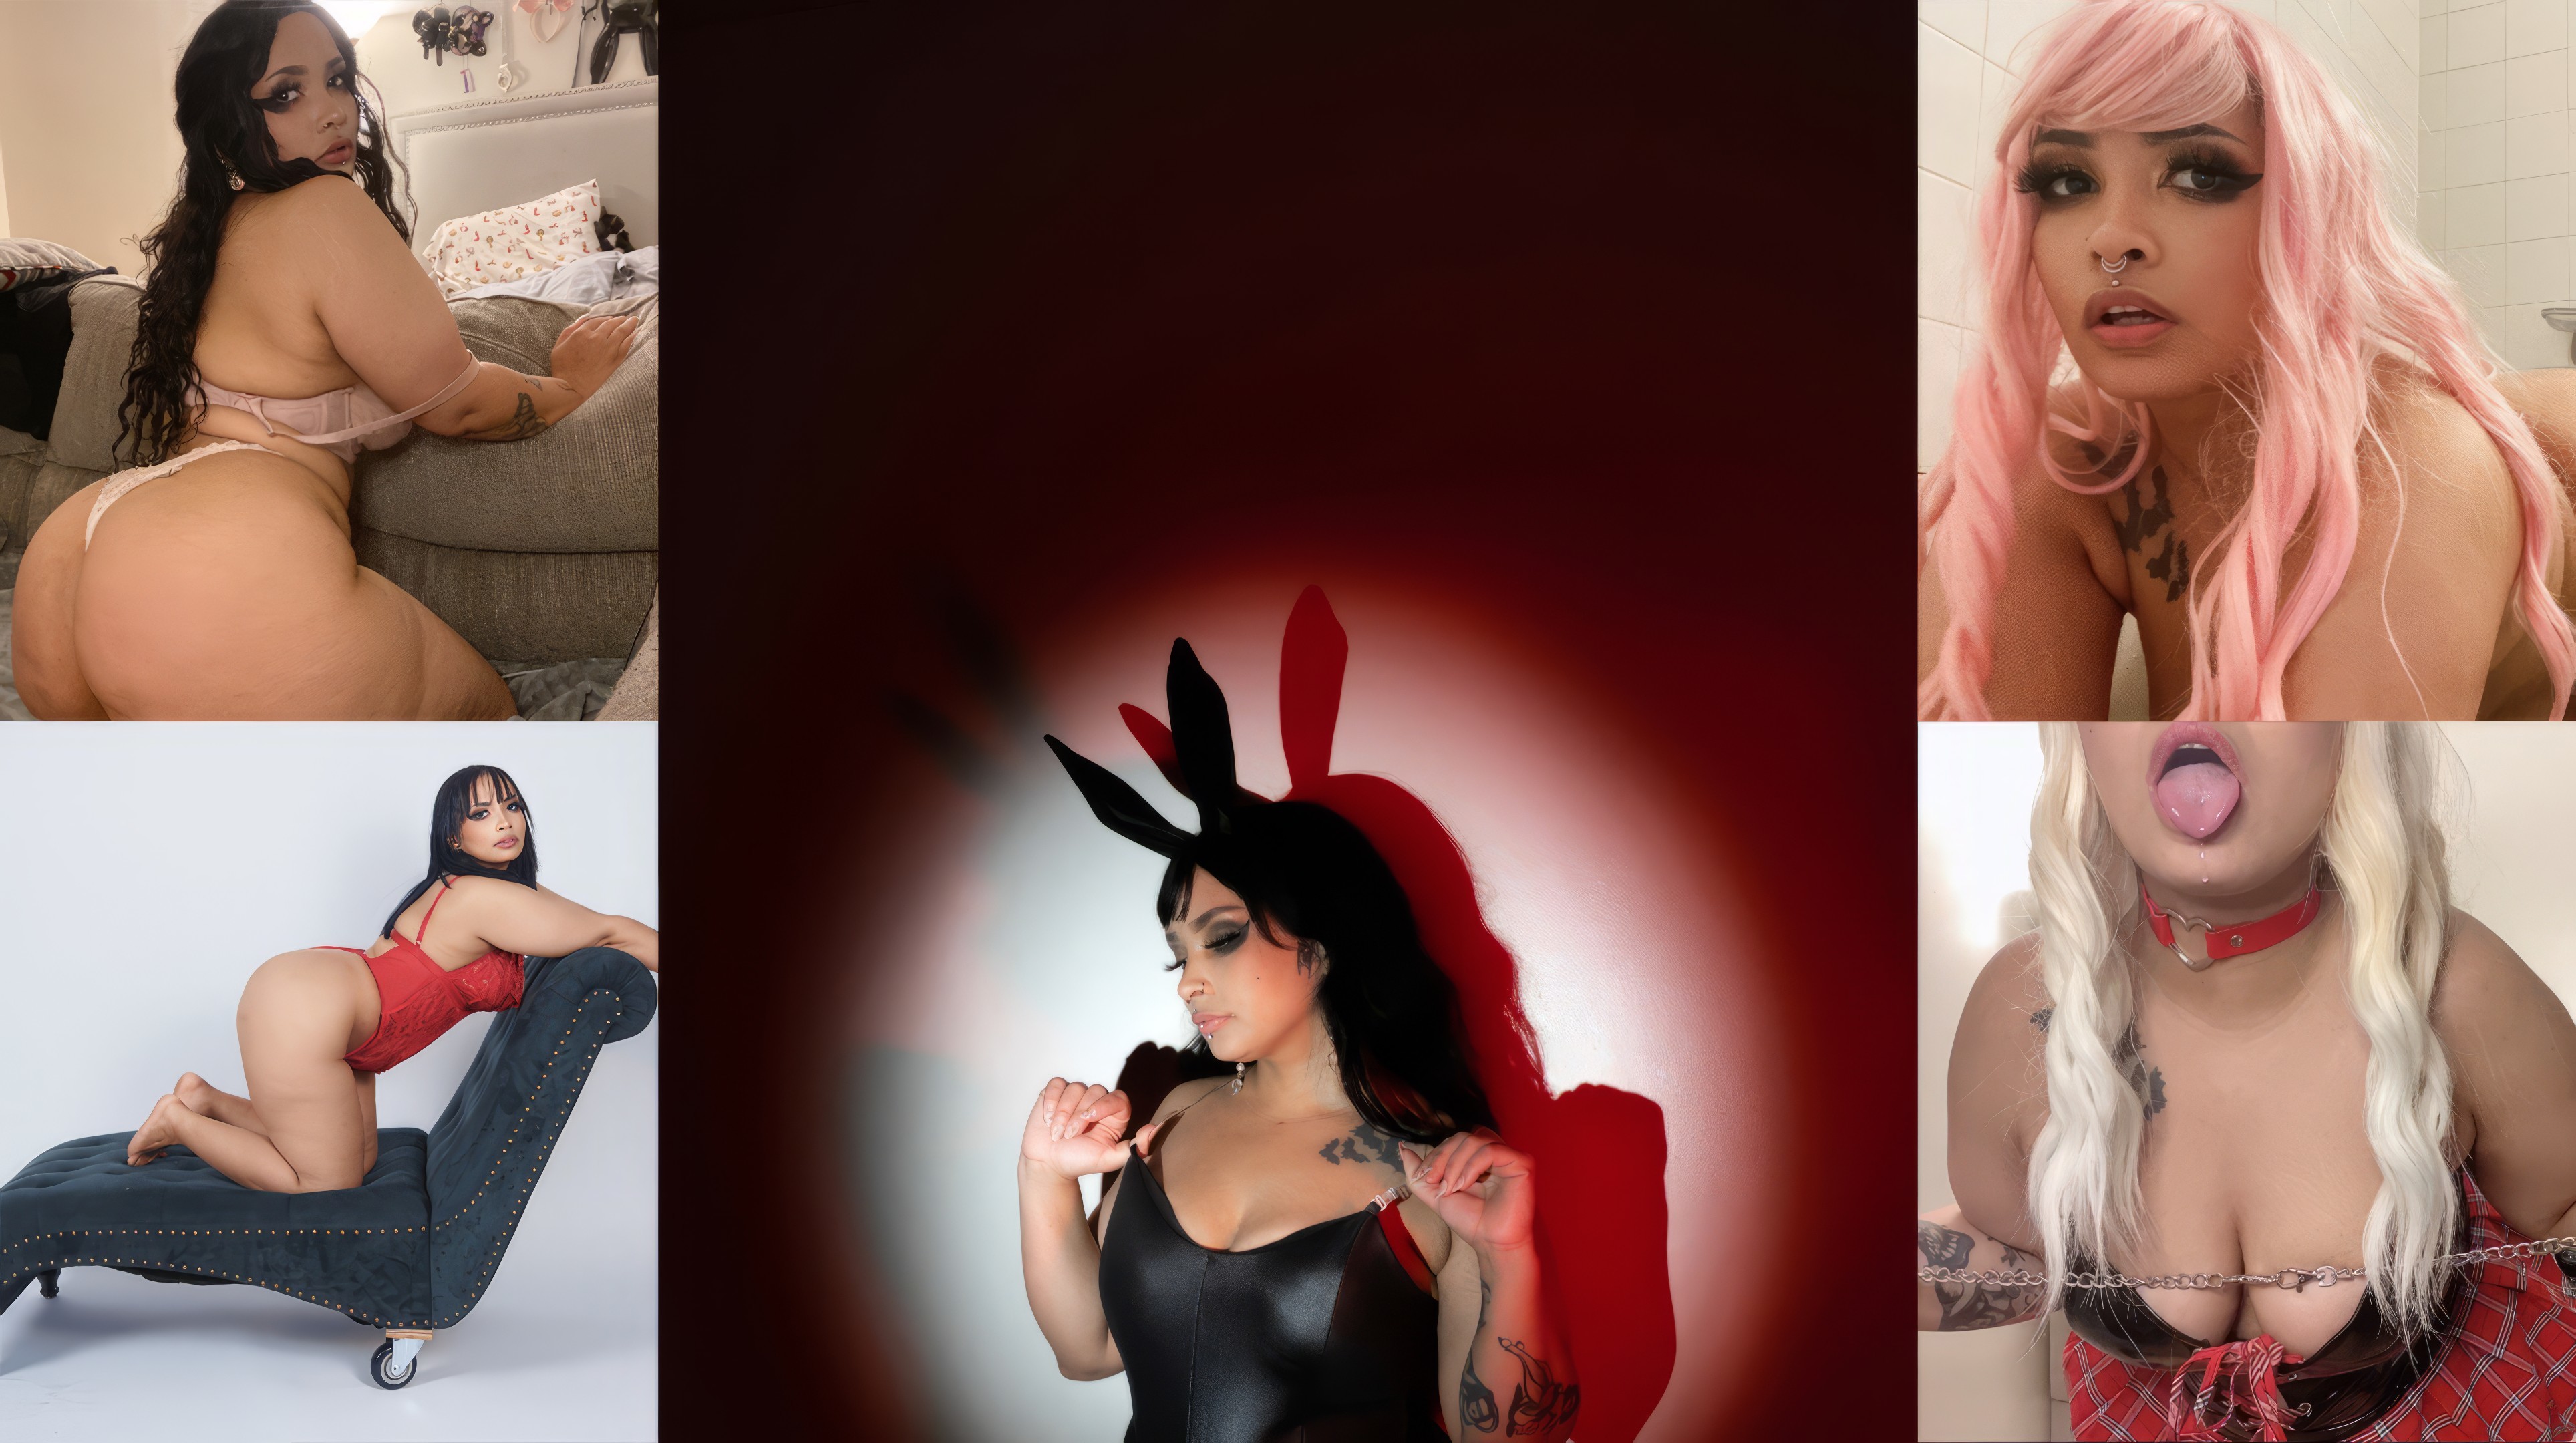 [Onlyfans.com] SunnyBunnyyyy Video Pack (391 ролик) (PuffyBunniee) [2023, Amateur, Anal, BBW, Big Ass, Big Tits, Blowjob, Creampie, Dildo, Facial, Hardcore, Latex, Lingerie, Latina, Lesbian, Masturbation, Natural Tits, Posing, Softcore, Solo, Titfuck ]